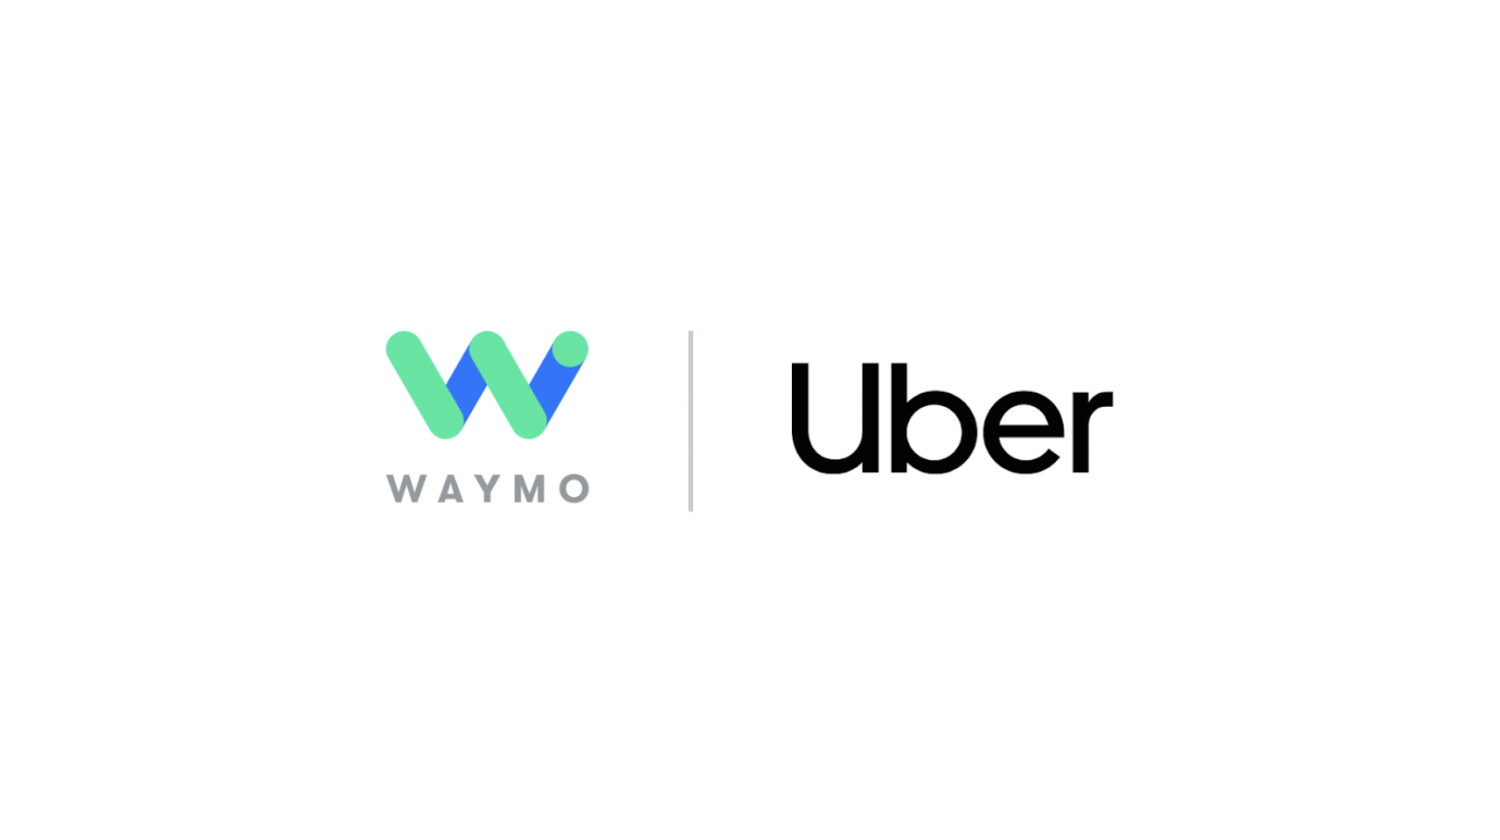 Waymo and Uber